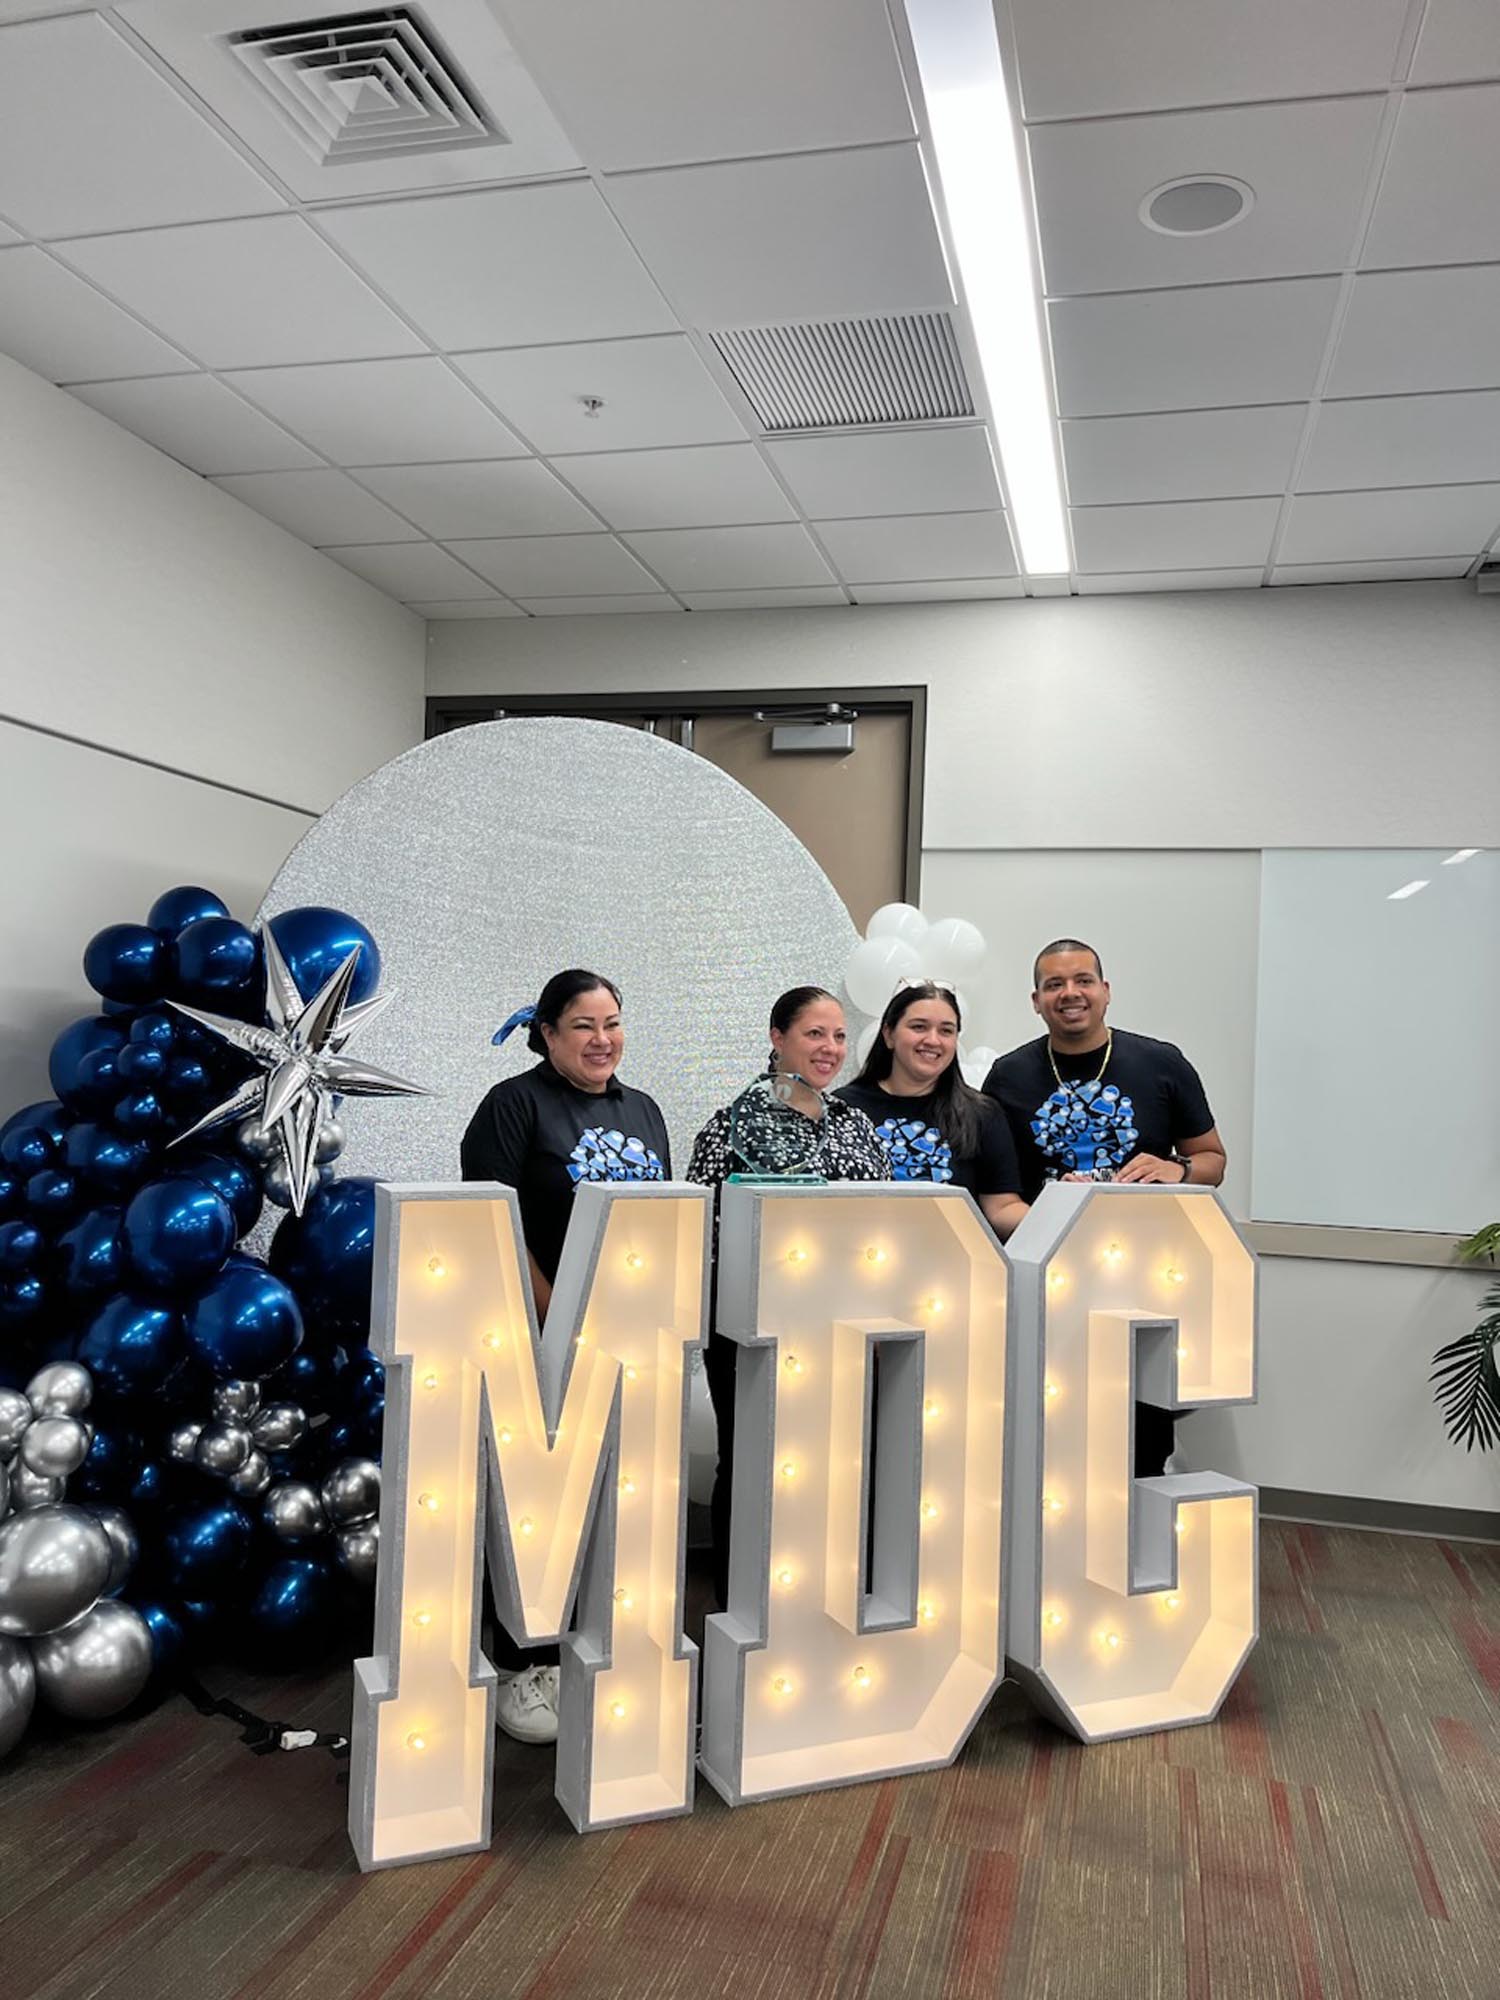 OYC staff poses behind an MDC logo